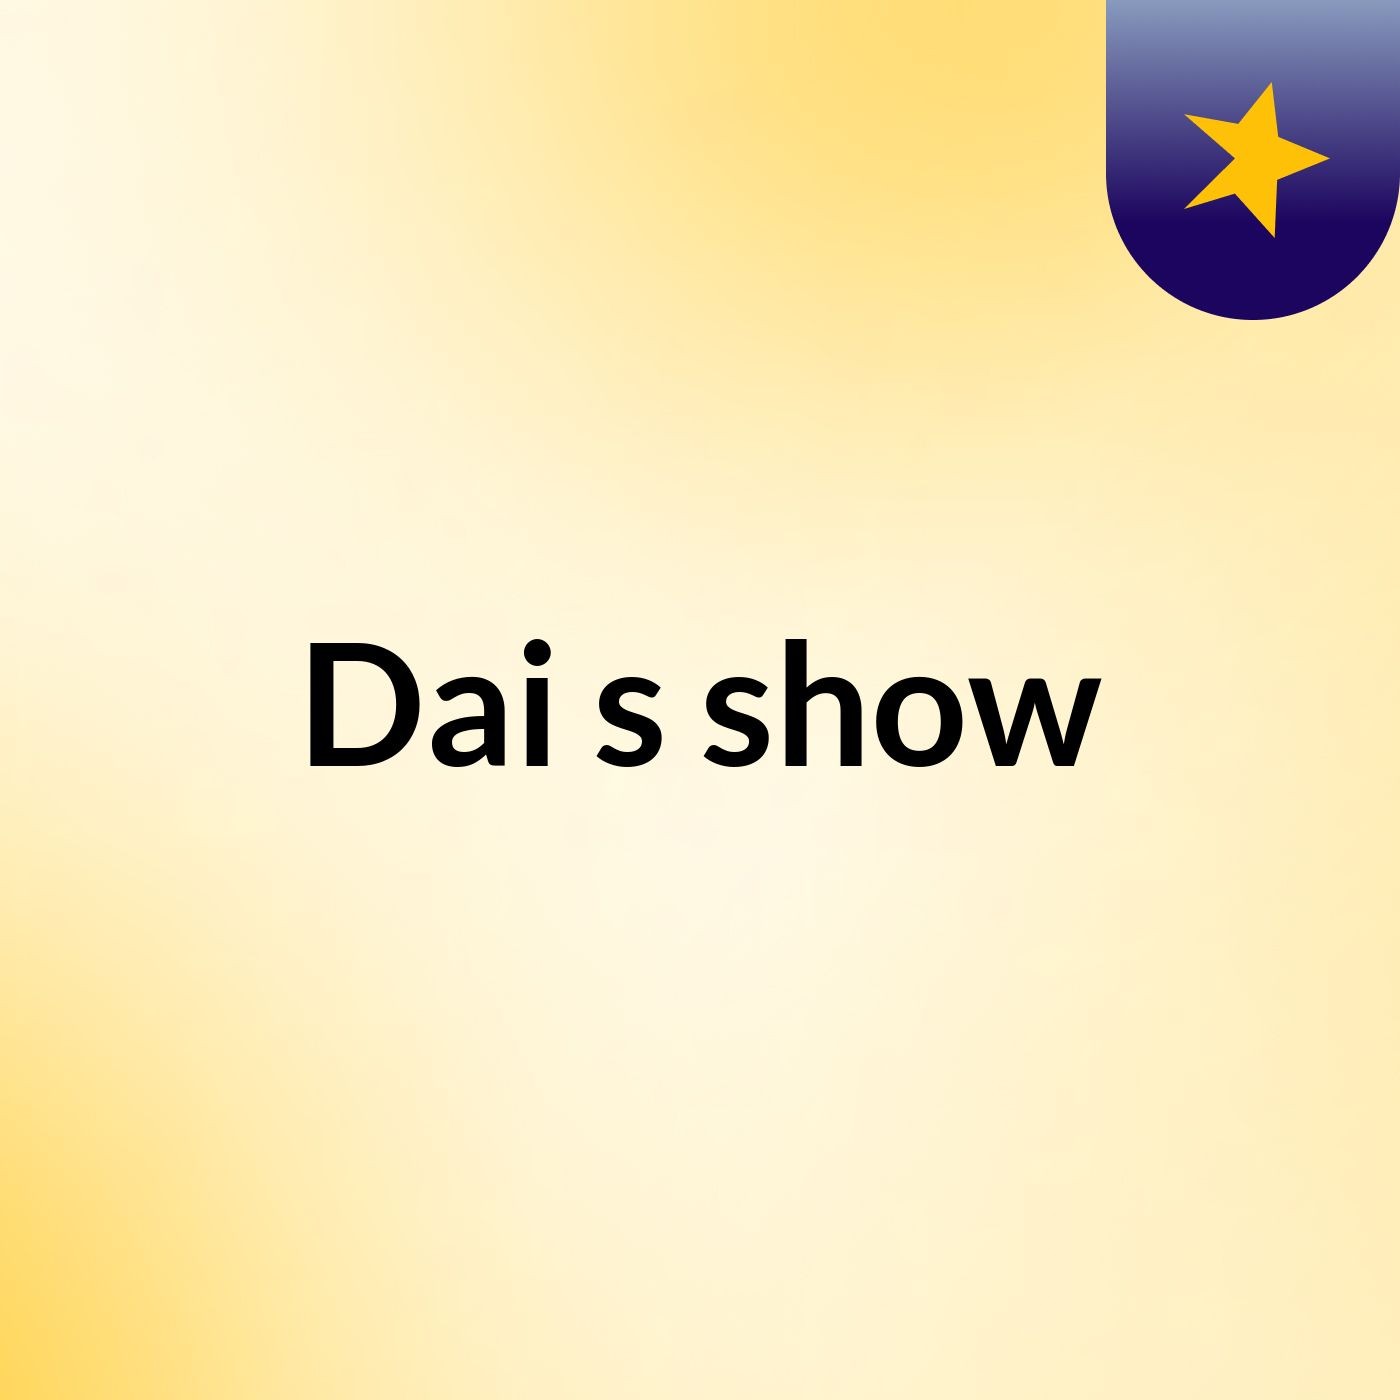 Dai's show